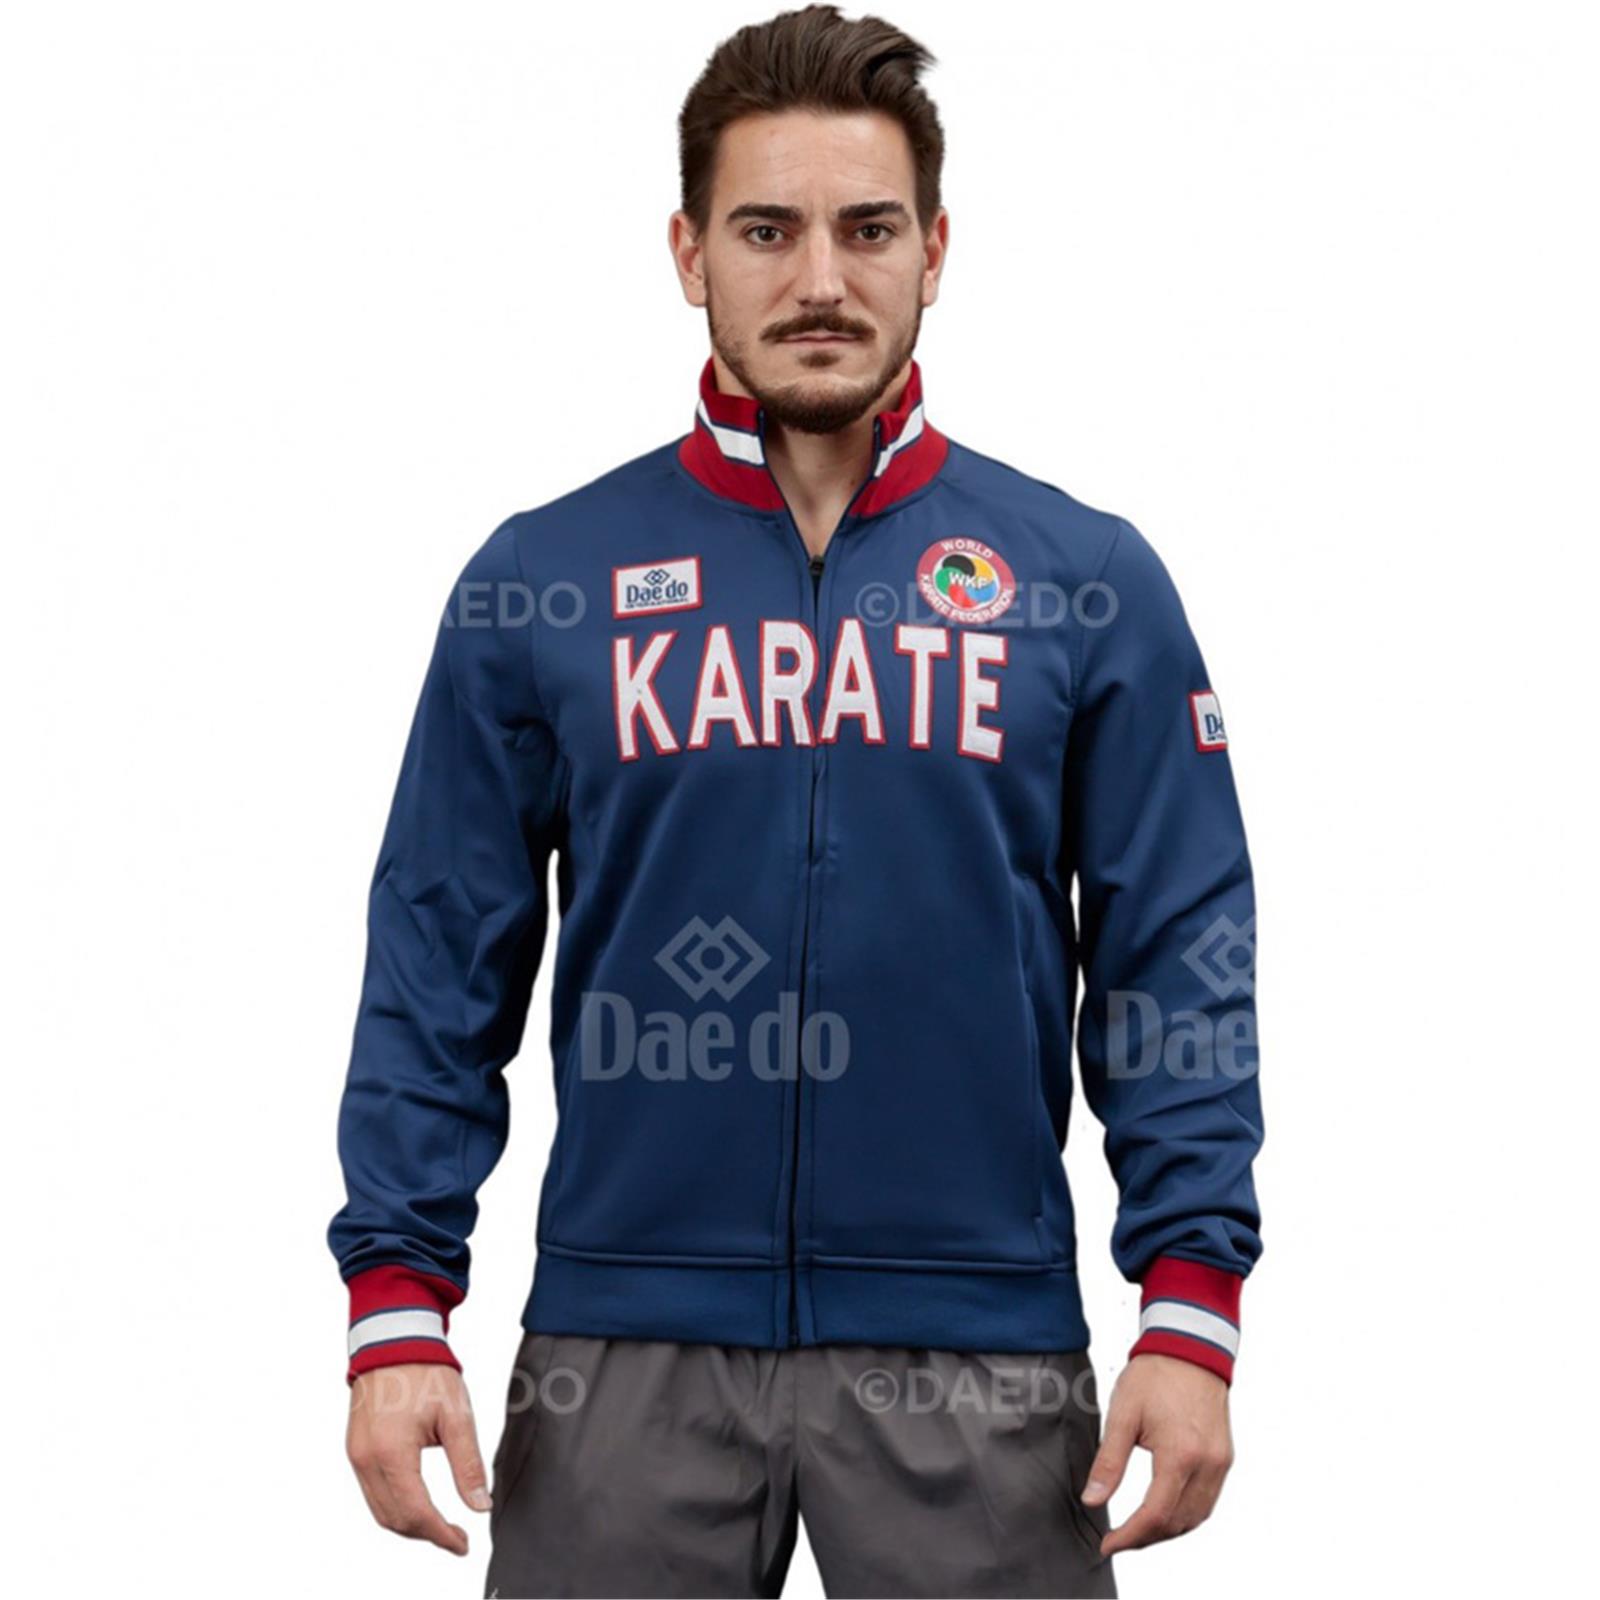 Dae Do Felpa Sportiva Karate slim jacket blu navy (S - BLU NAVY)